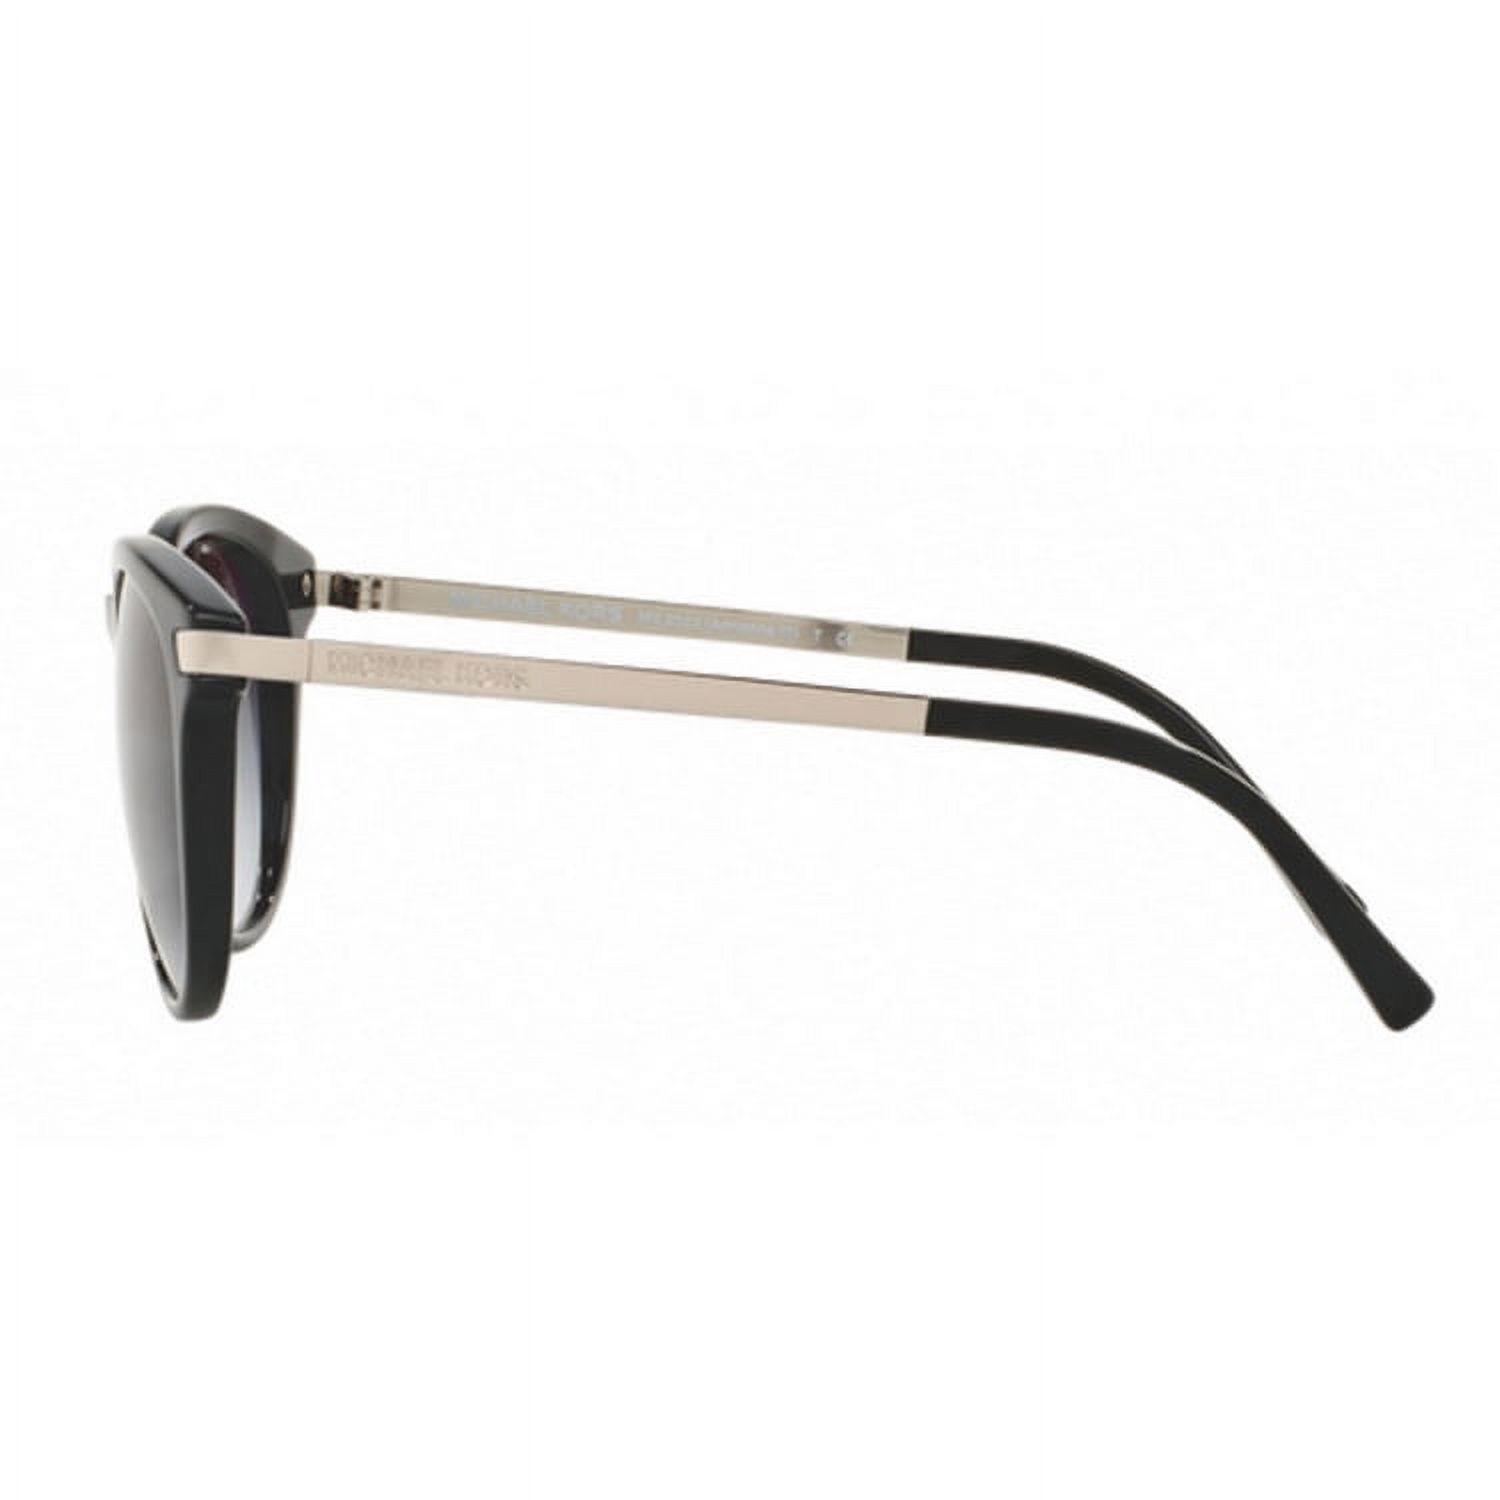 Michael Kors MK2023 Adrianna III Round Woman Sunglasses - image 3 of 3